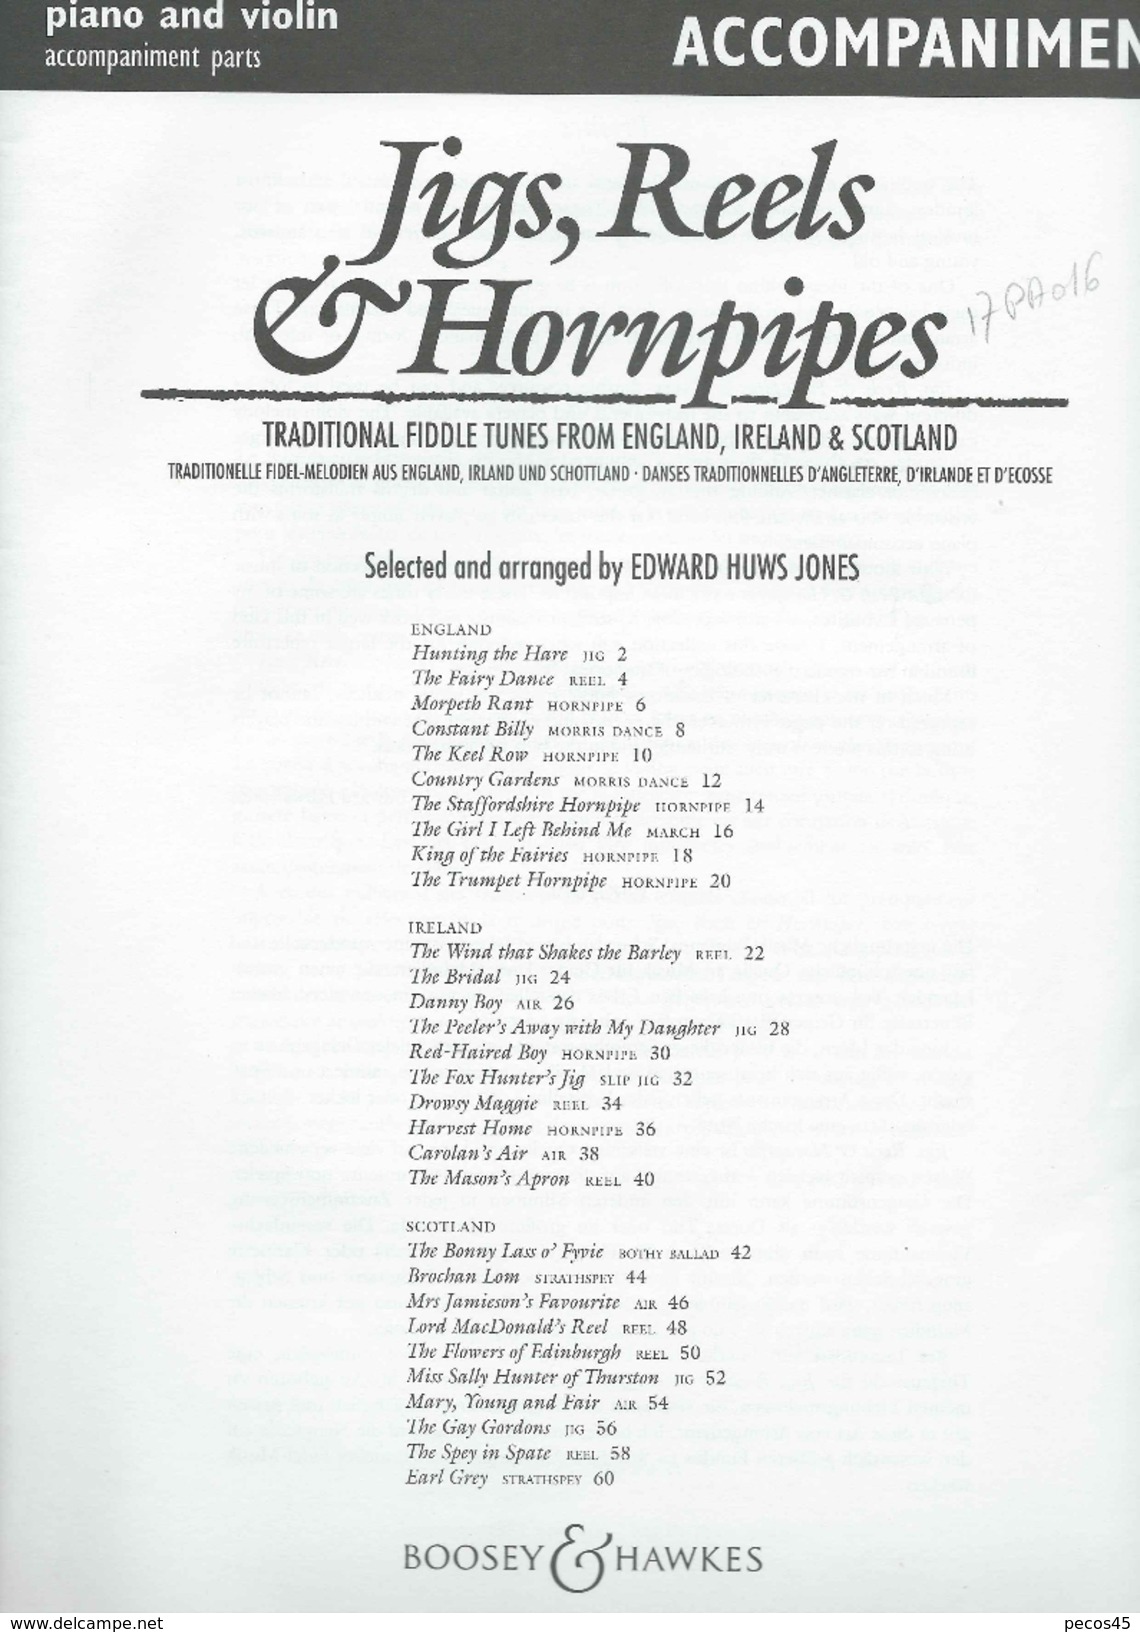 "JIGS, REELS & HORNPIPES" - Editions Boosey & Hawkes / London - 1992. - Scholingsboek